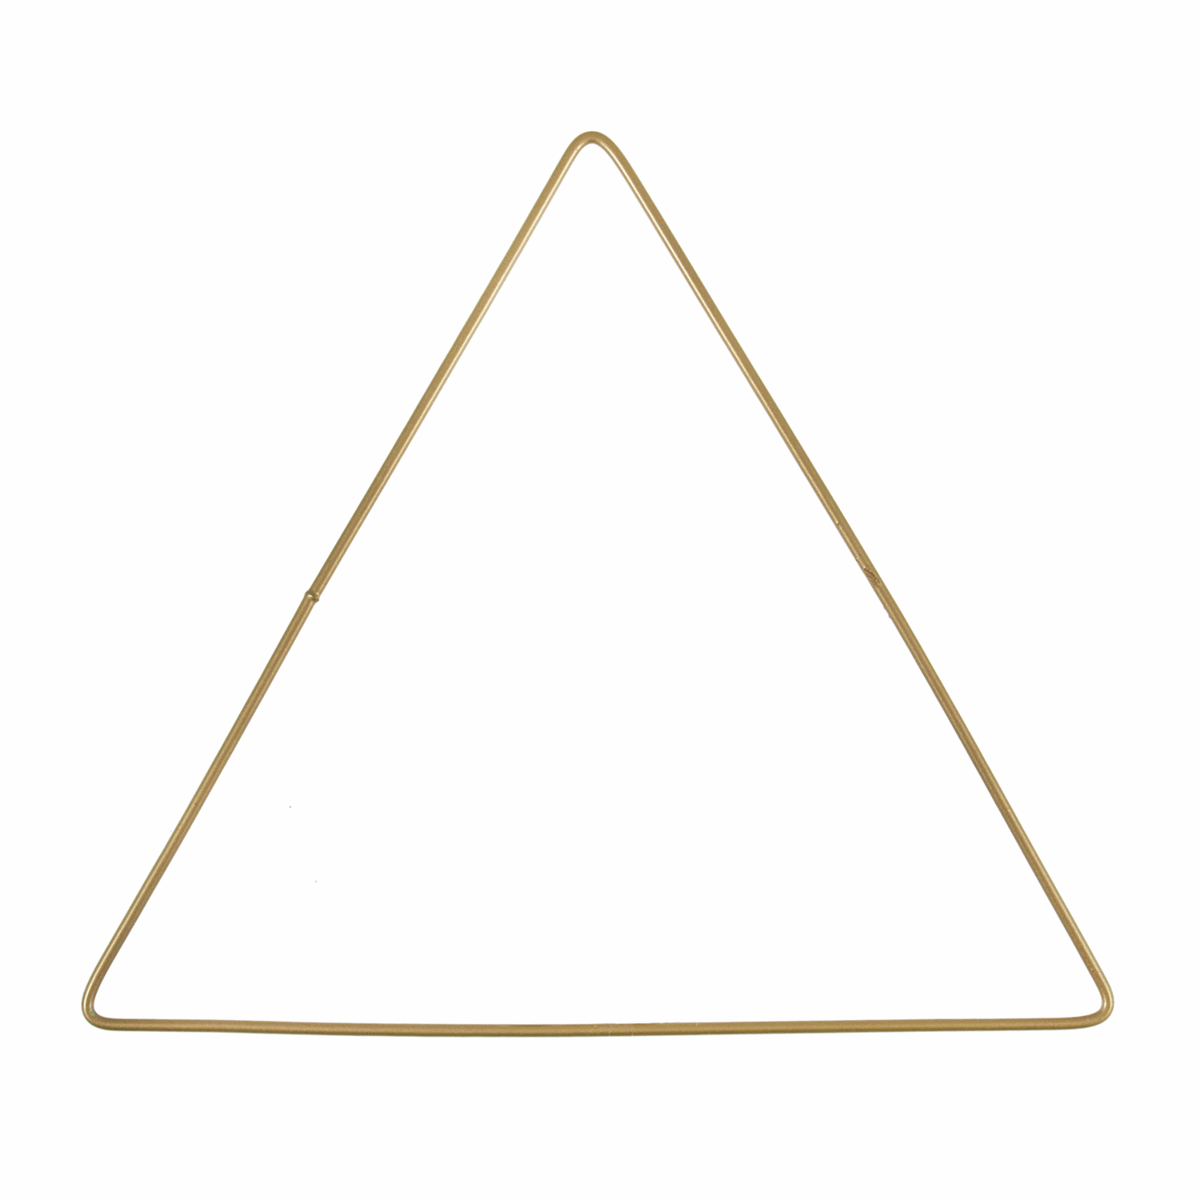 Trimits Gold Metal Triangle Craft Hoop - 20cm